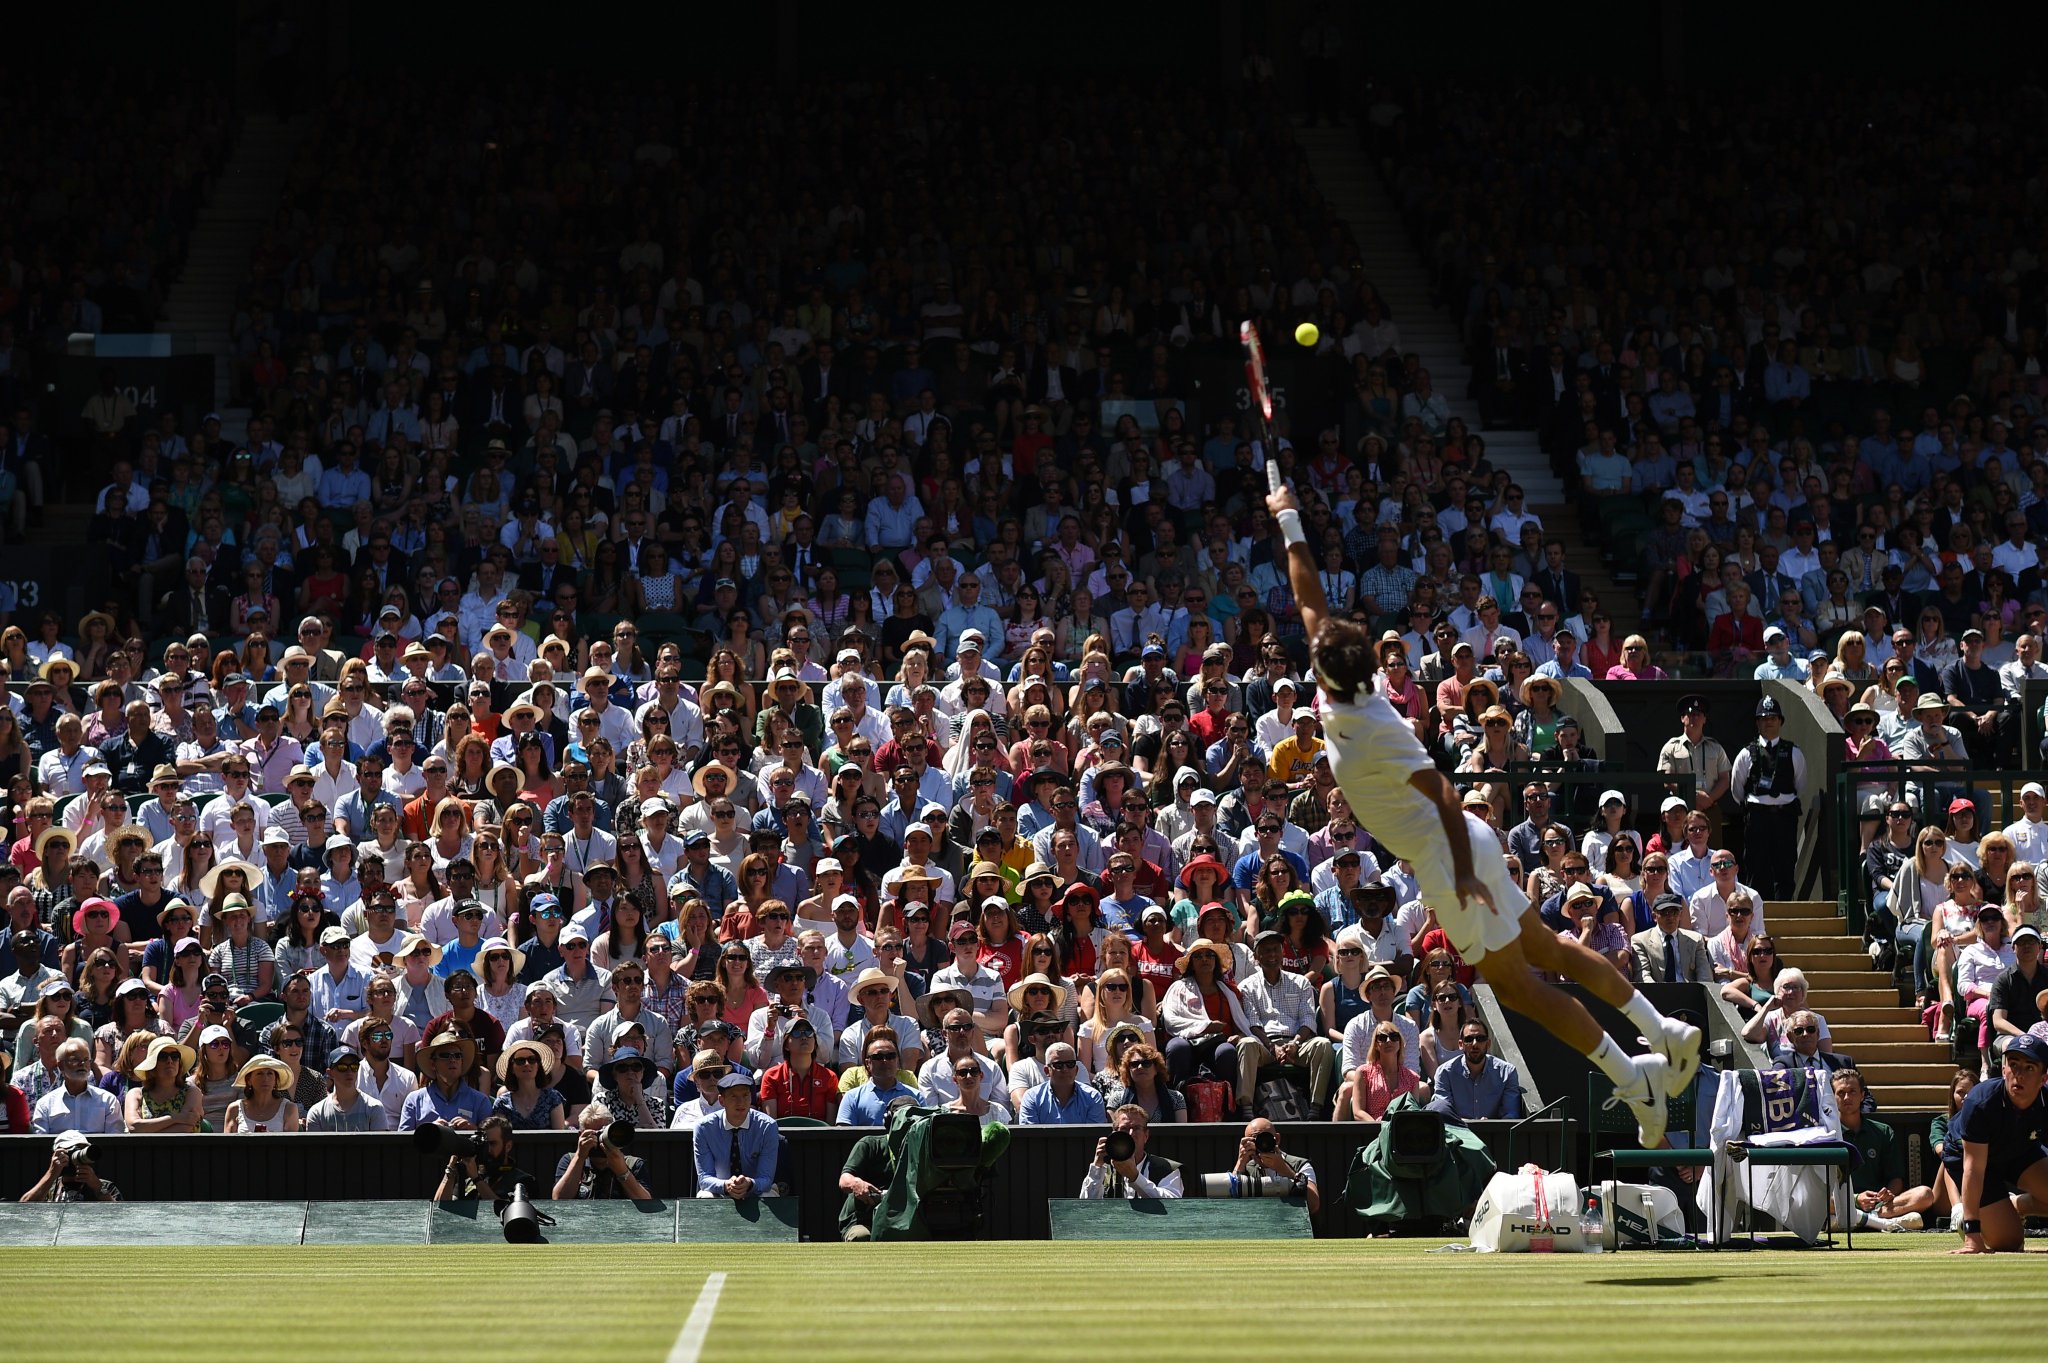 Roger Federer en el torneo de Wimbledon 2016. Cortesía del artista